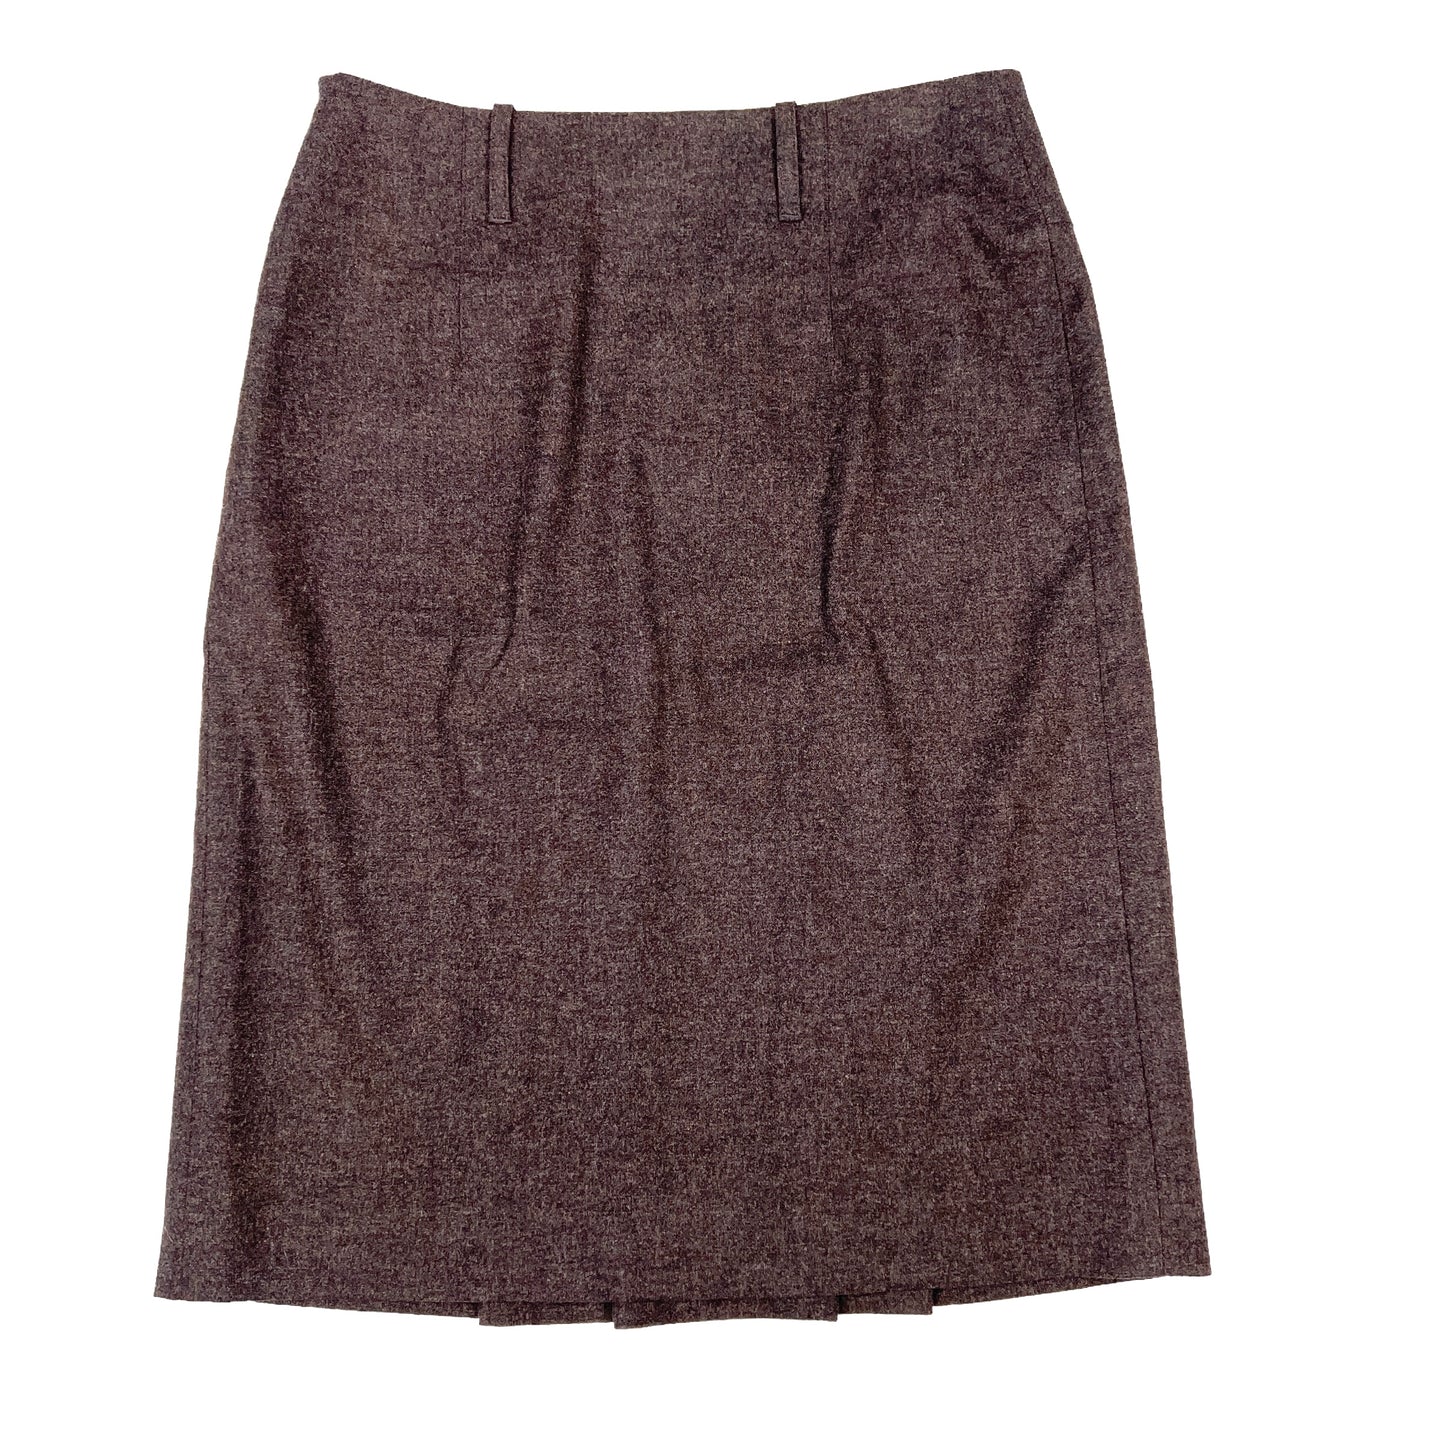 Grey Wool Skirt - 2